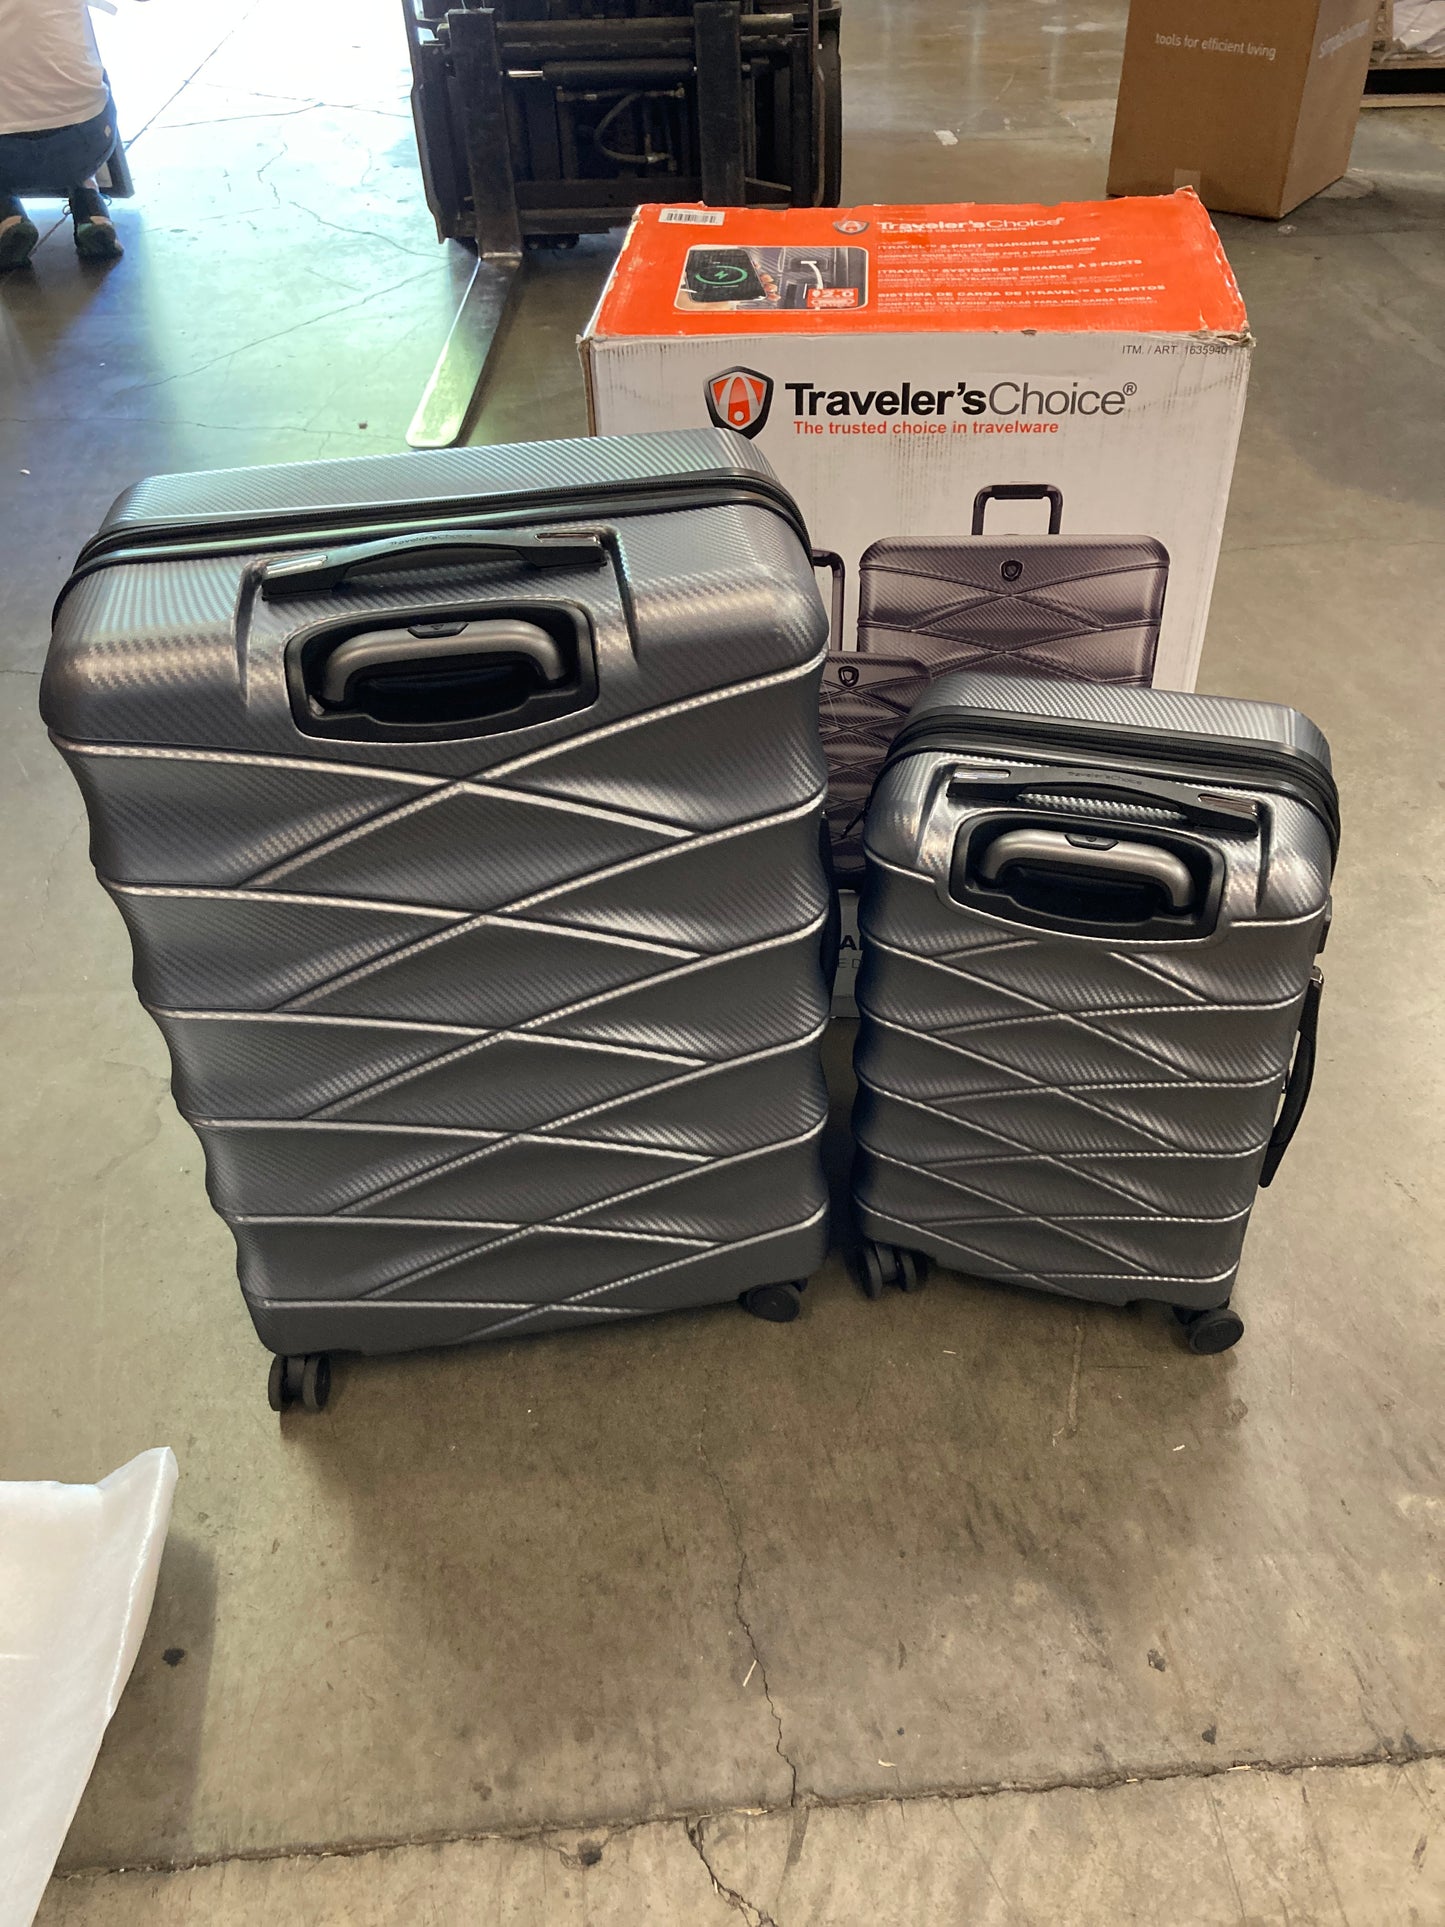 NEW - Traveler's Choice 2 Piece Luggage Set, Gray - Retail $169